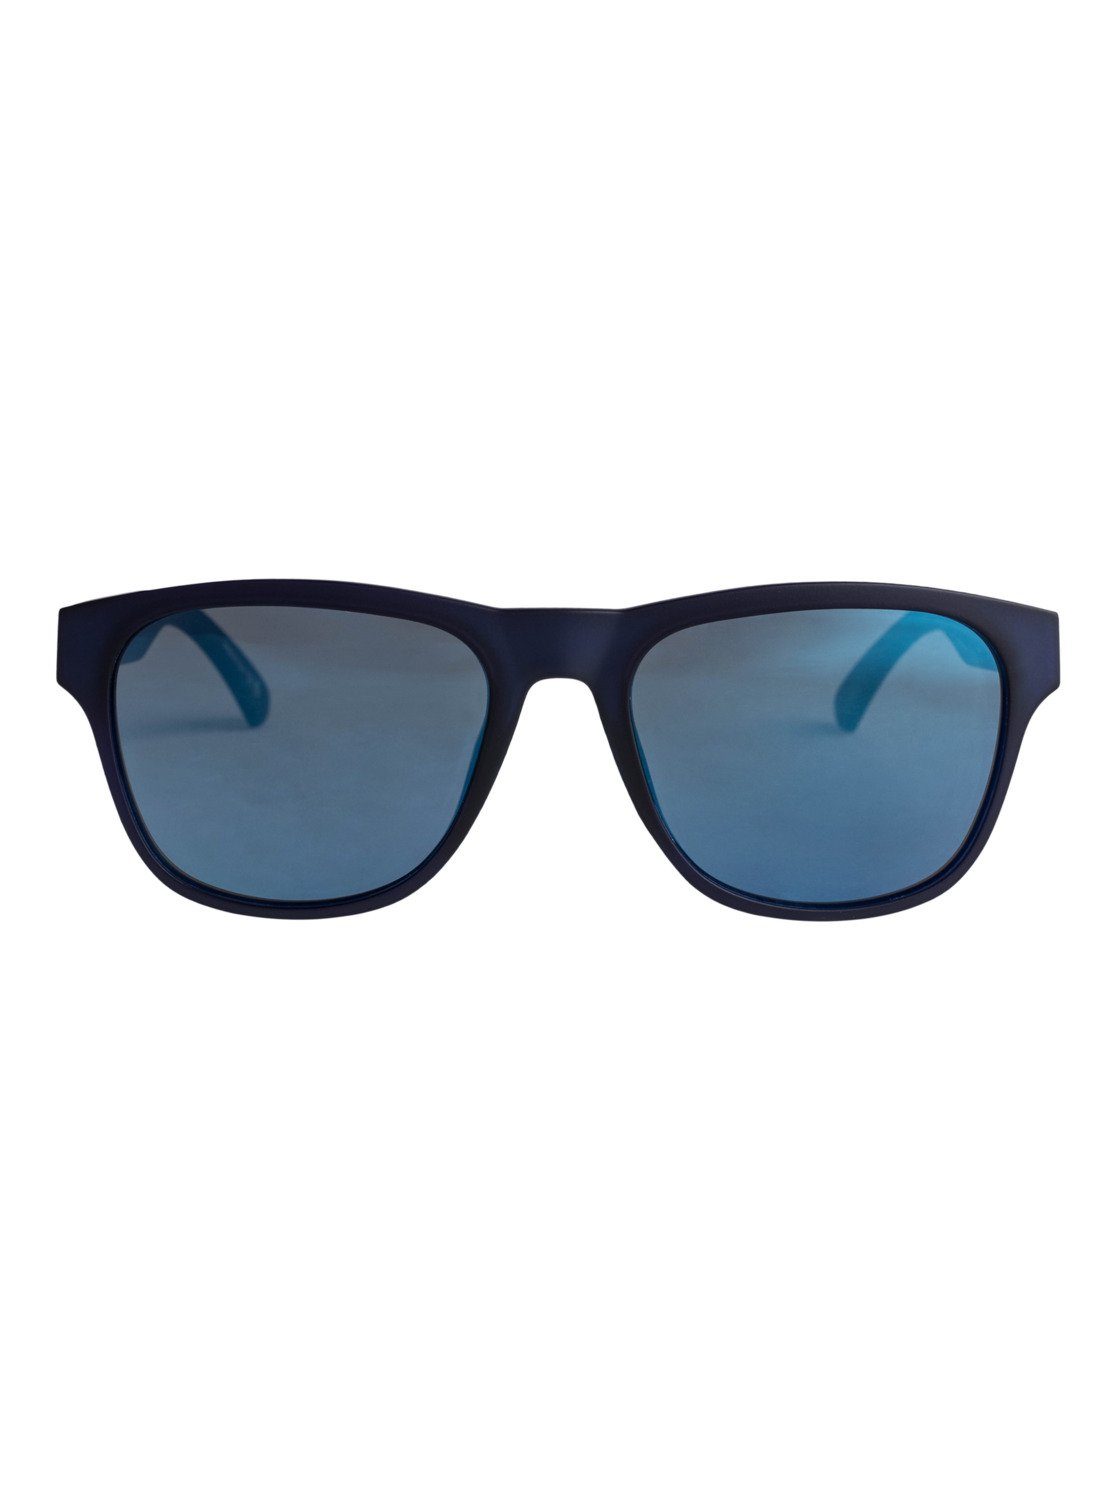 Navy/Flash Quiksilver Tagger Sonnenbrille Blue